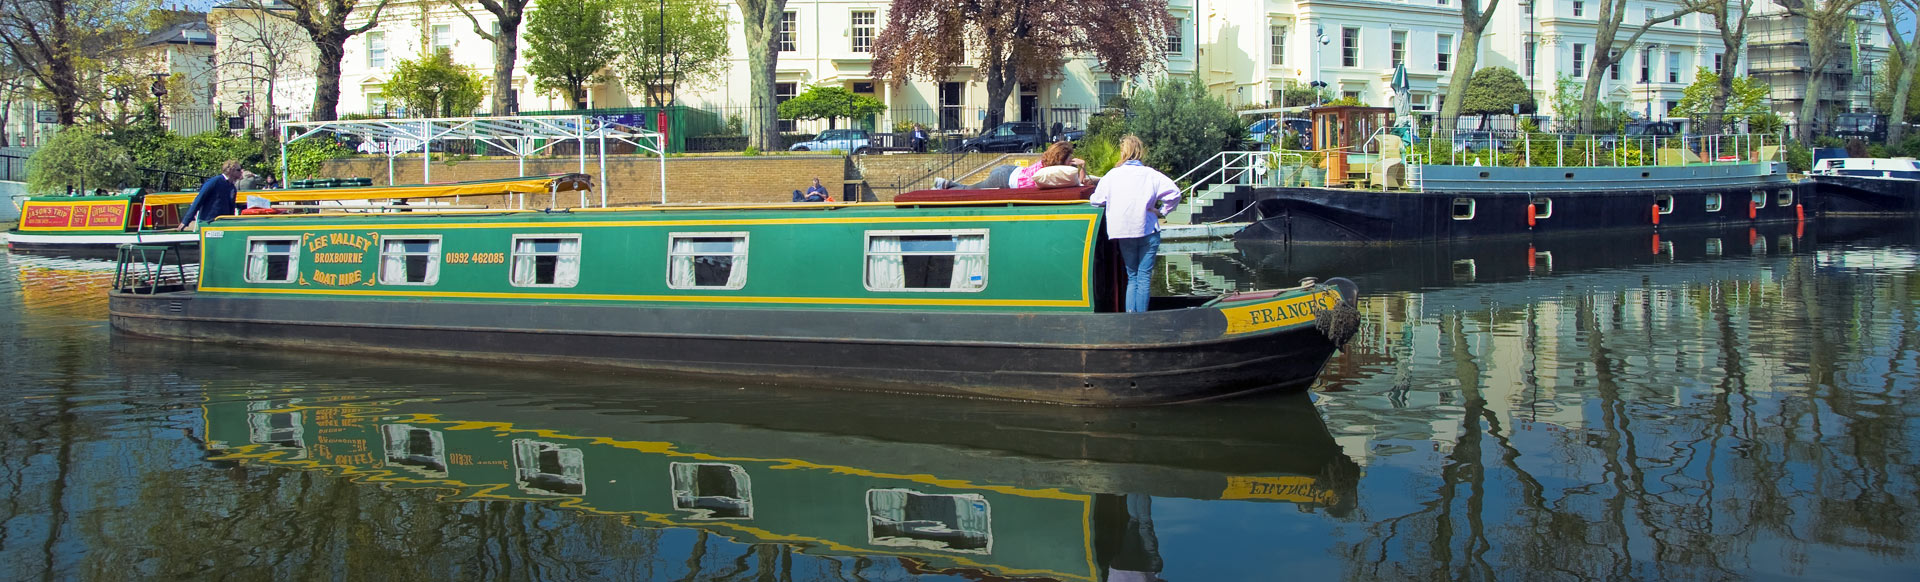 Green canal boat in Paddington